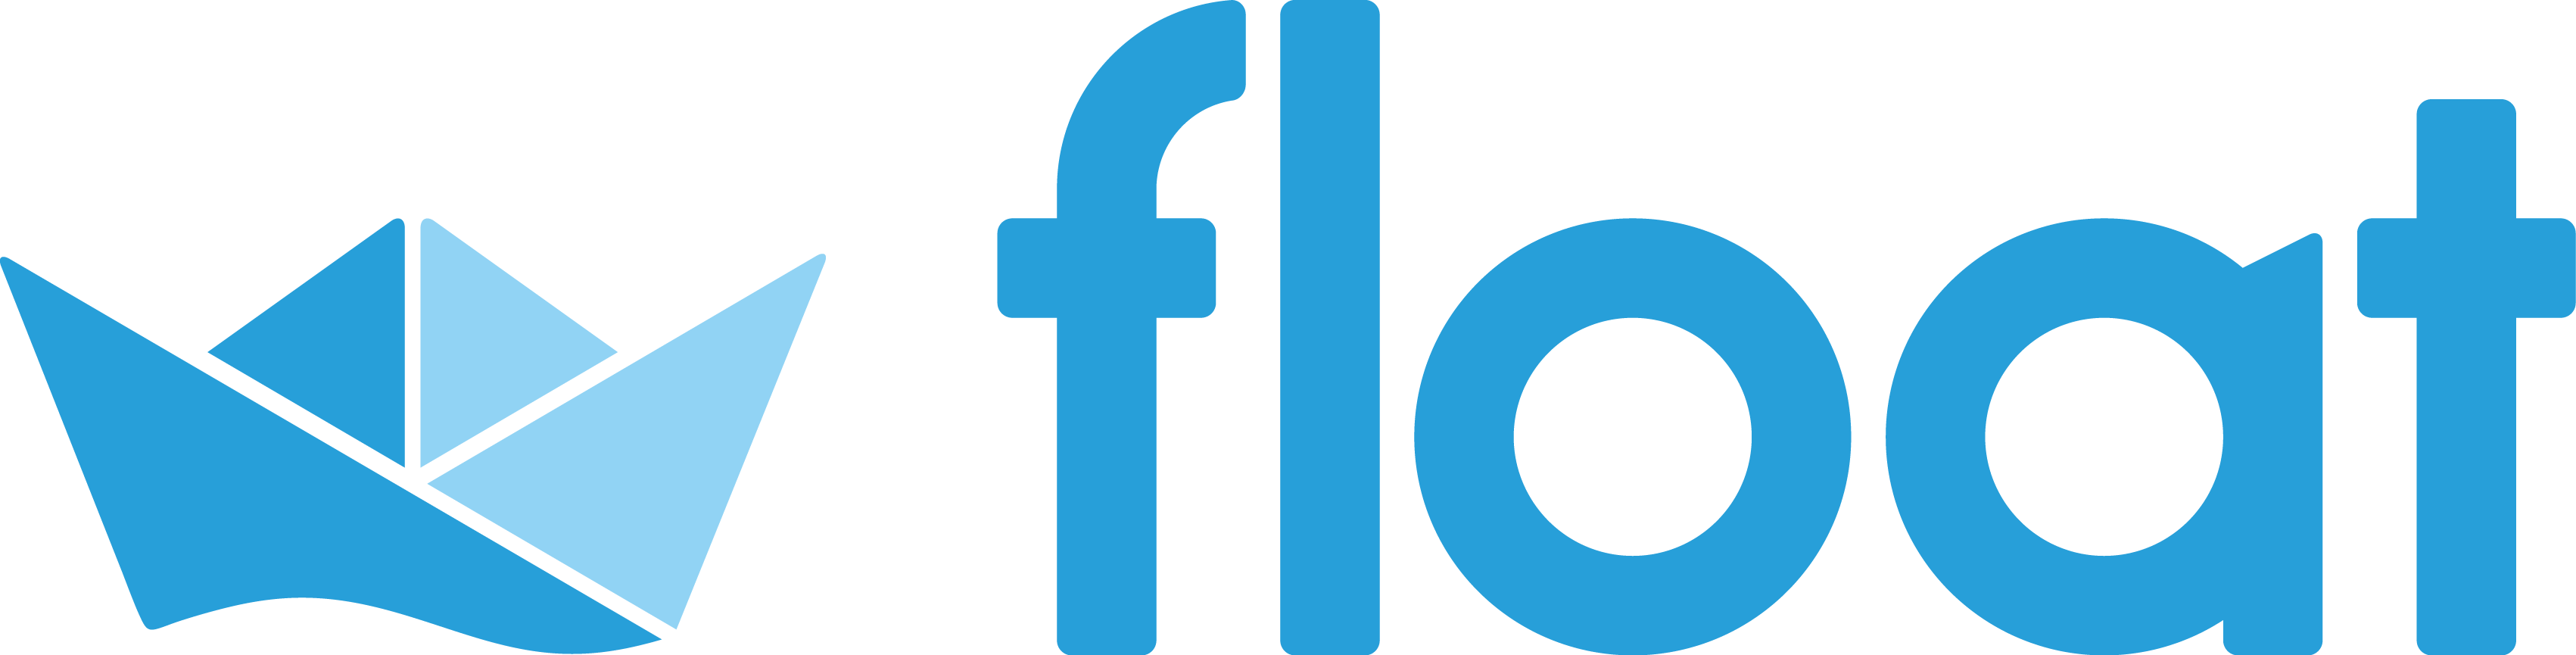 Float Logo